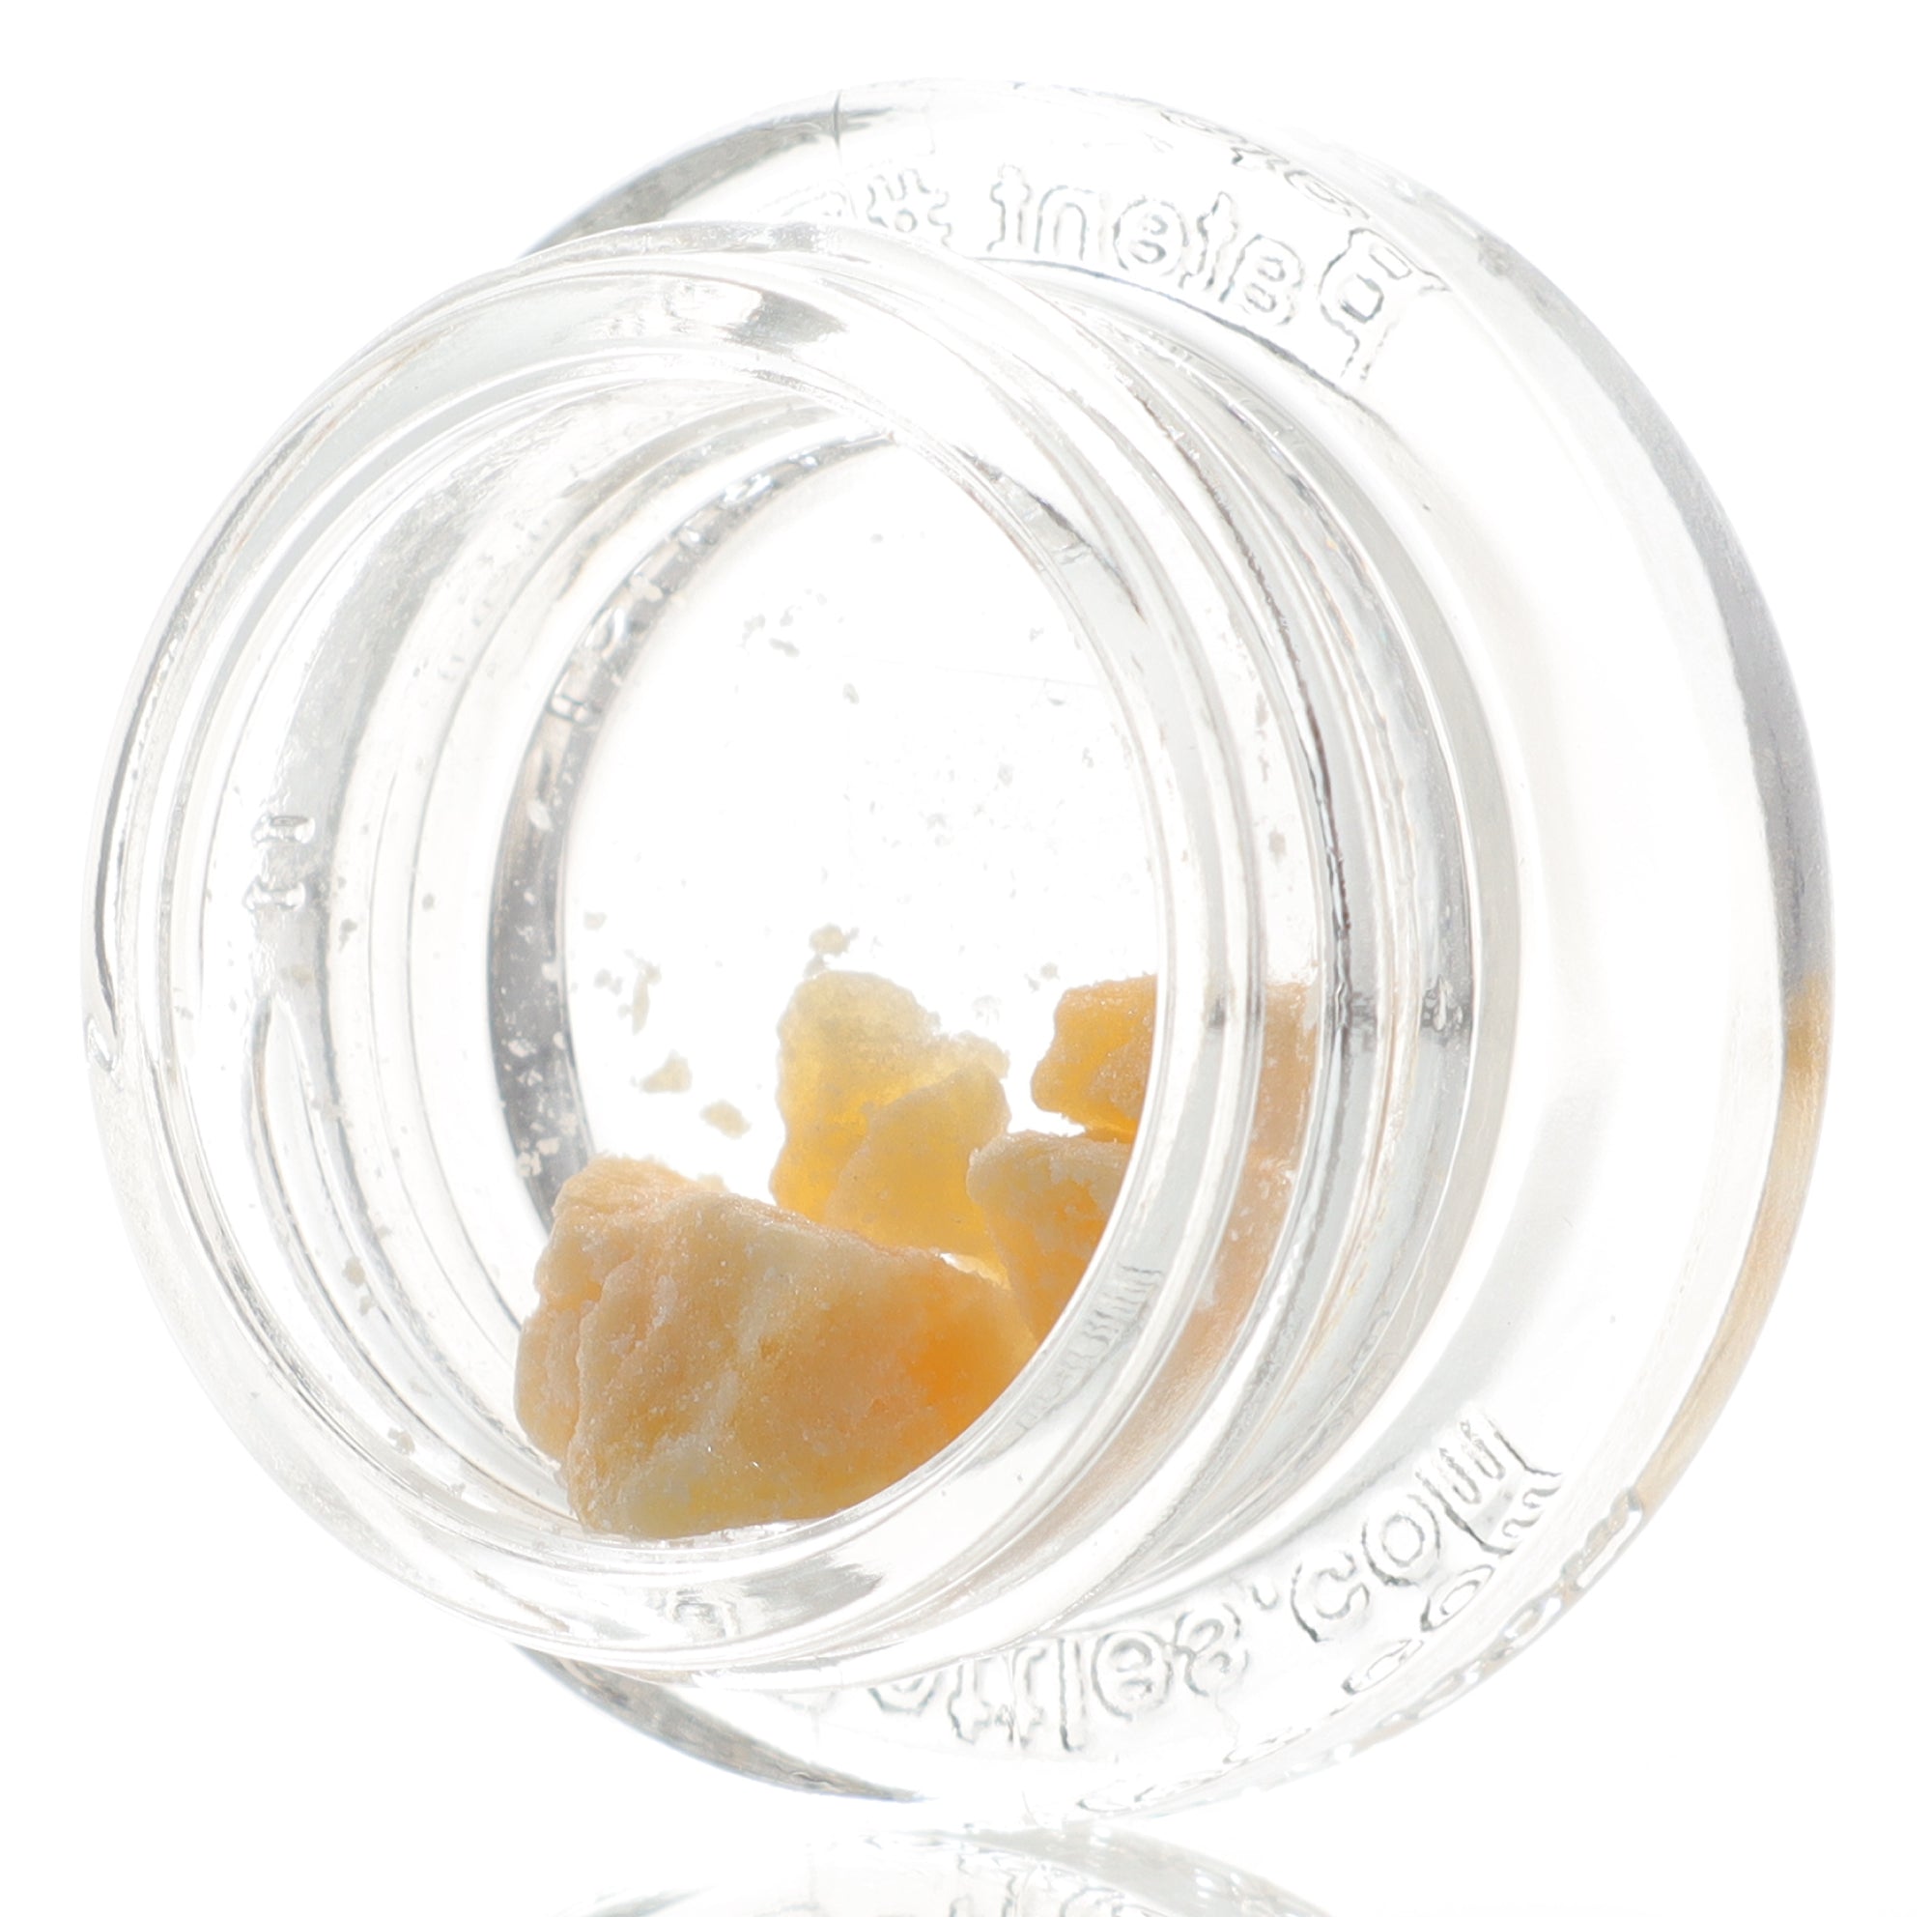 Concentrate jar containing Hemp Hop's Fruity OG CBD Live Resin